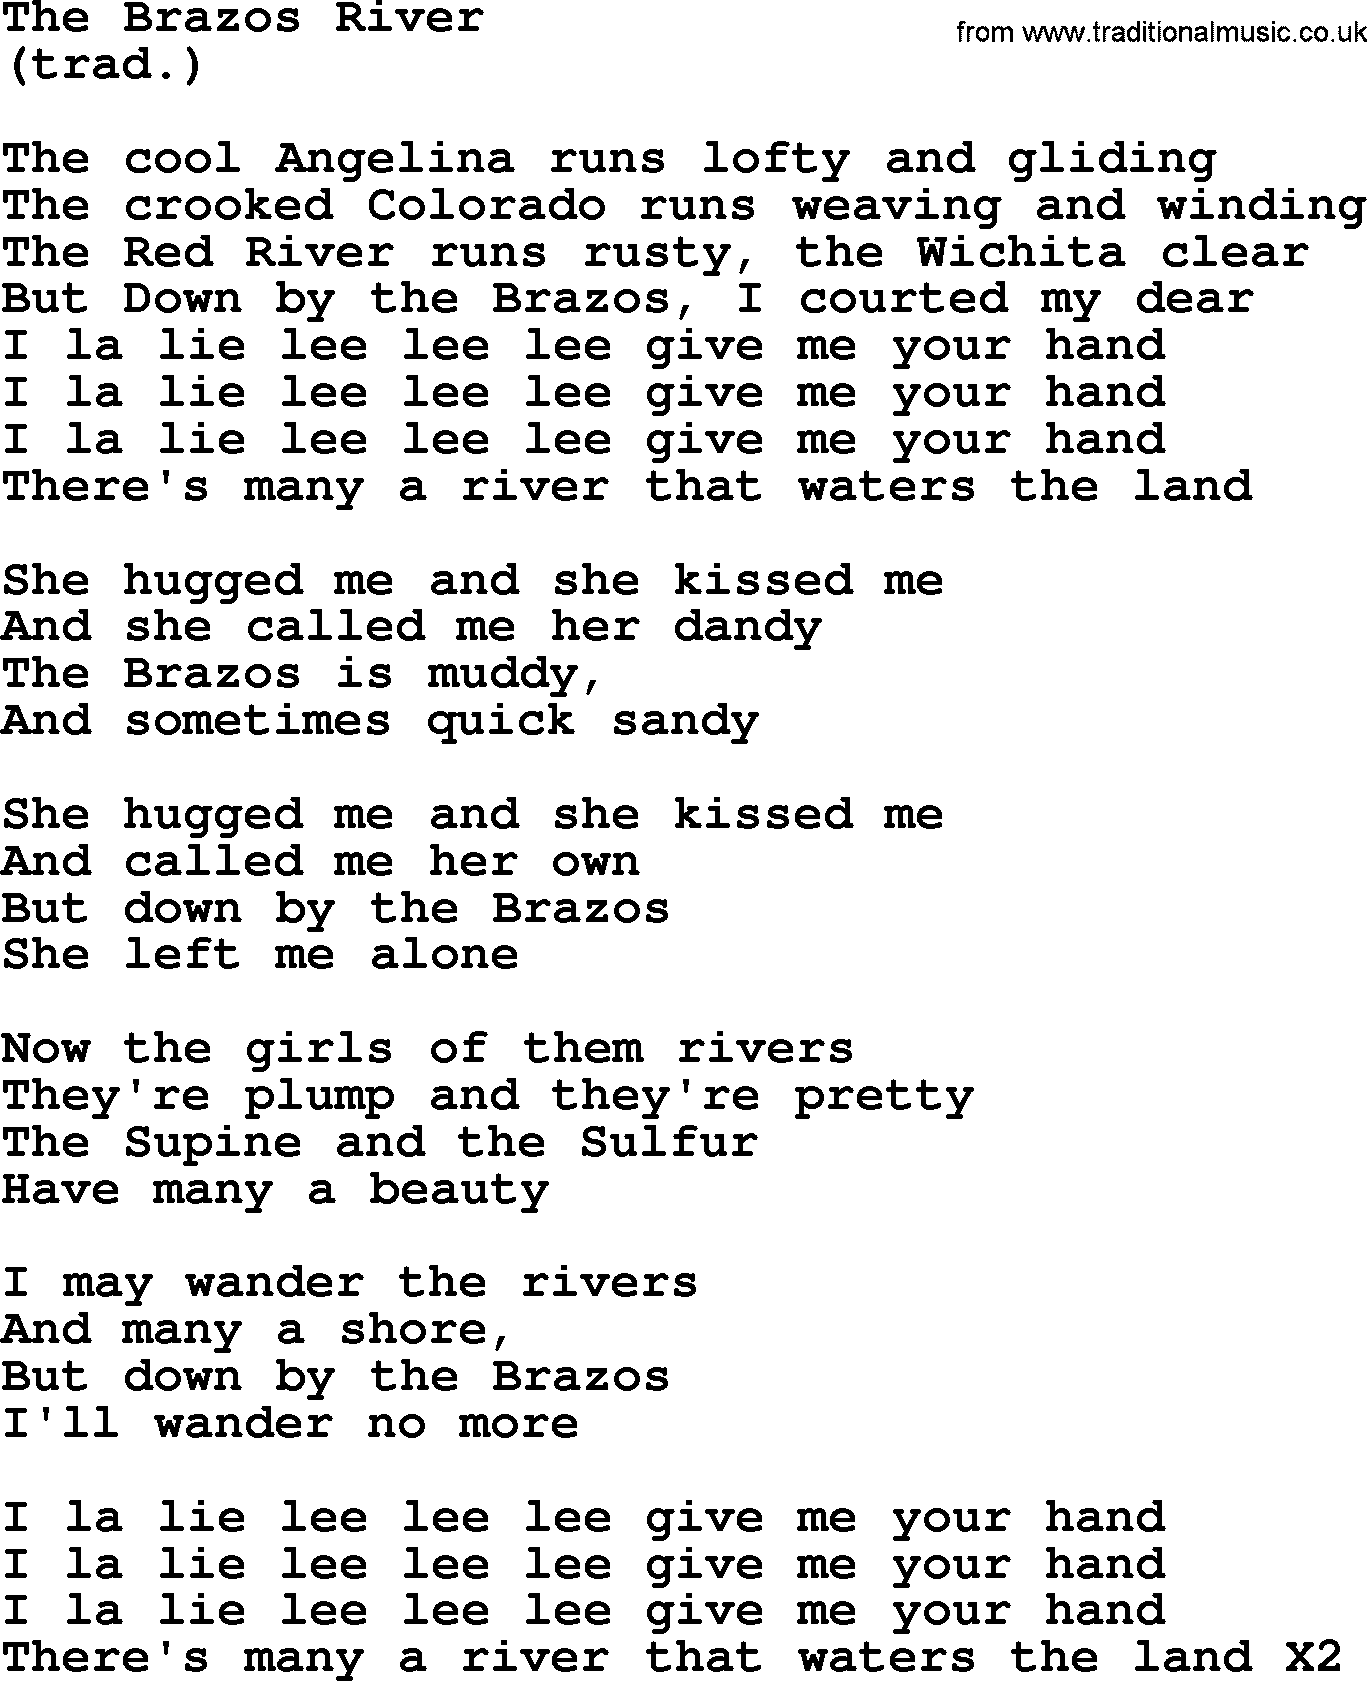 The Byrds song The Brazos River, lyrics